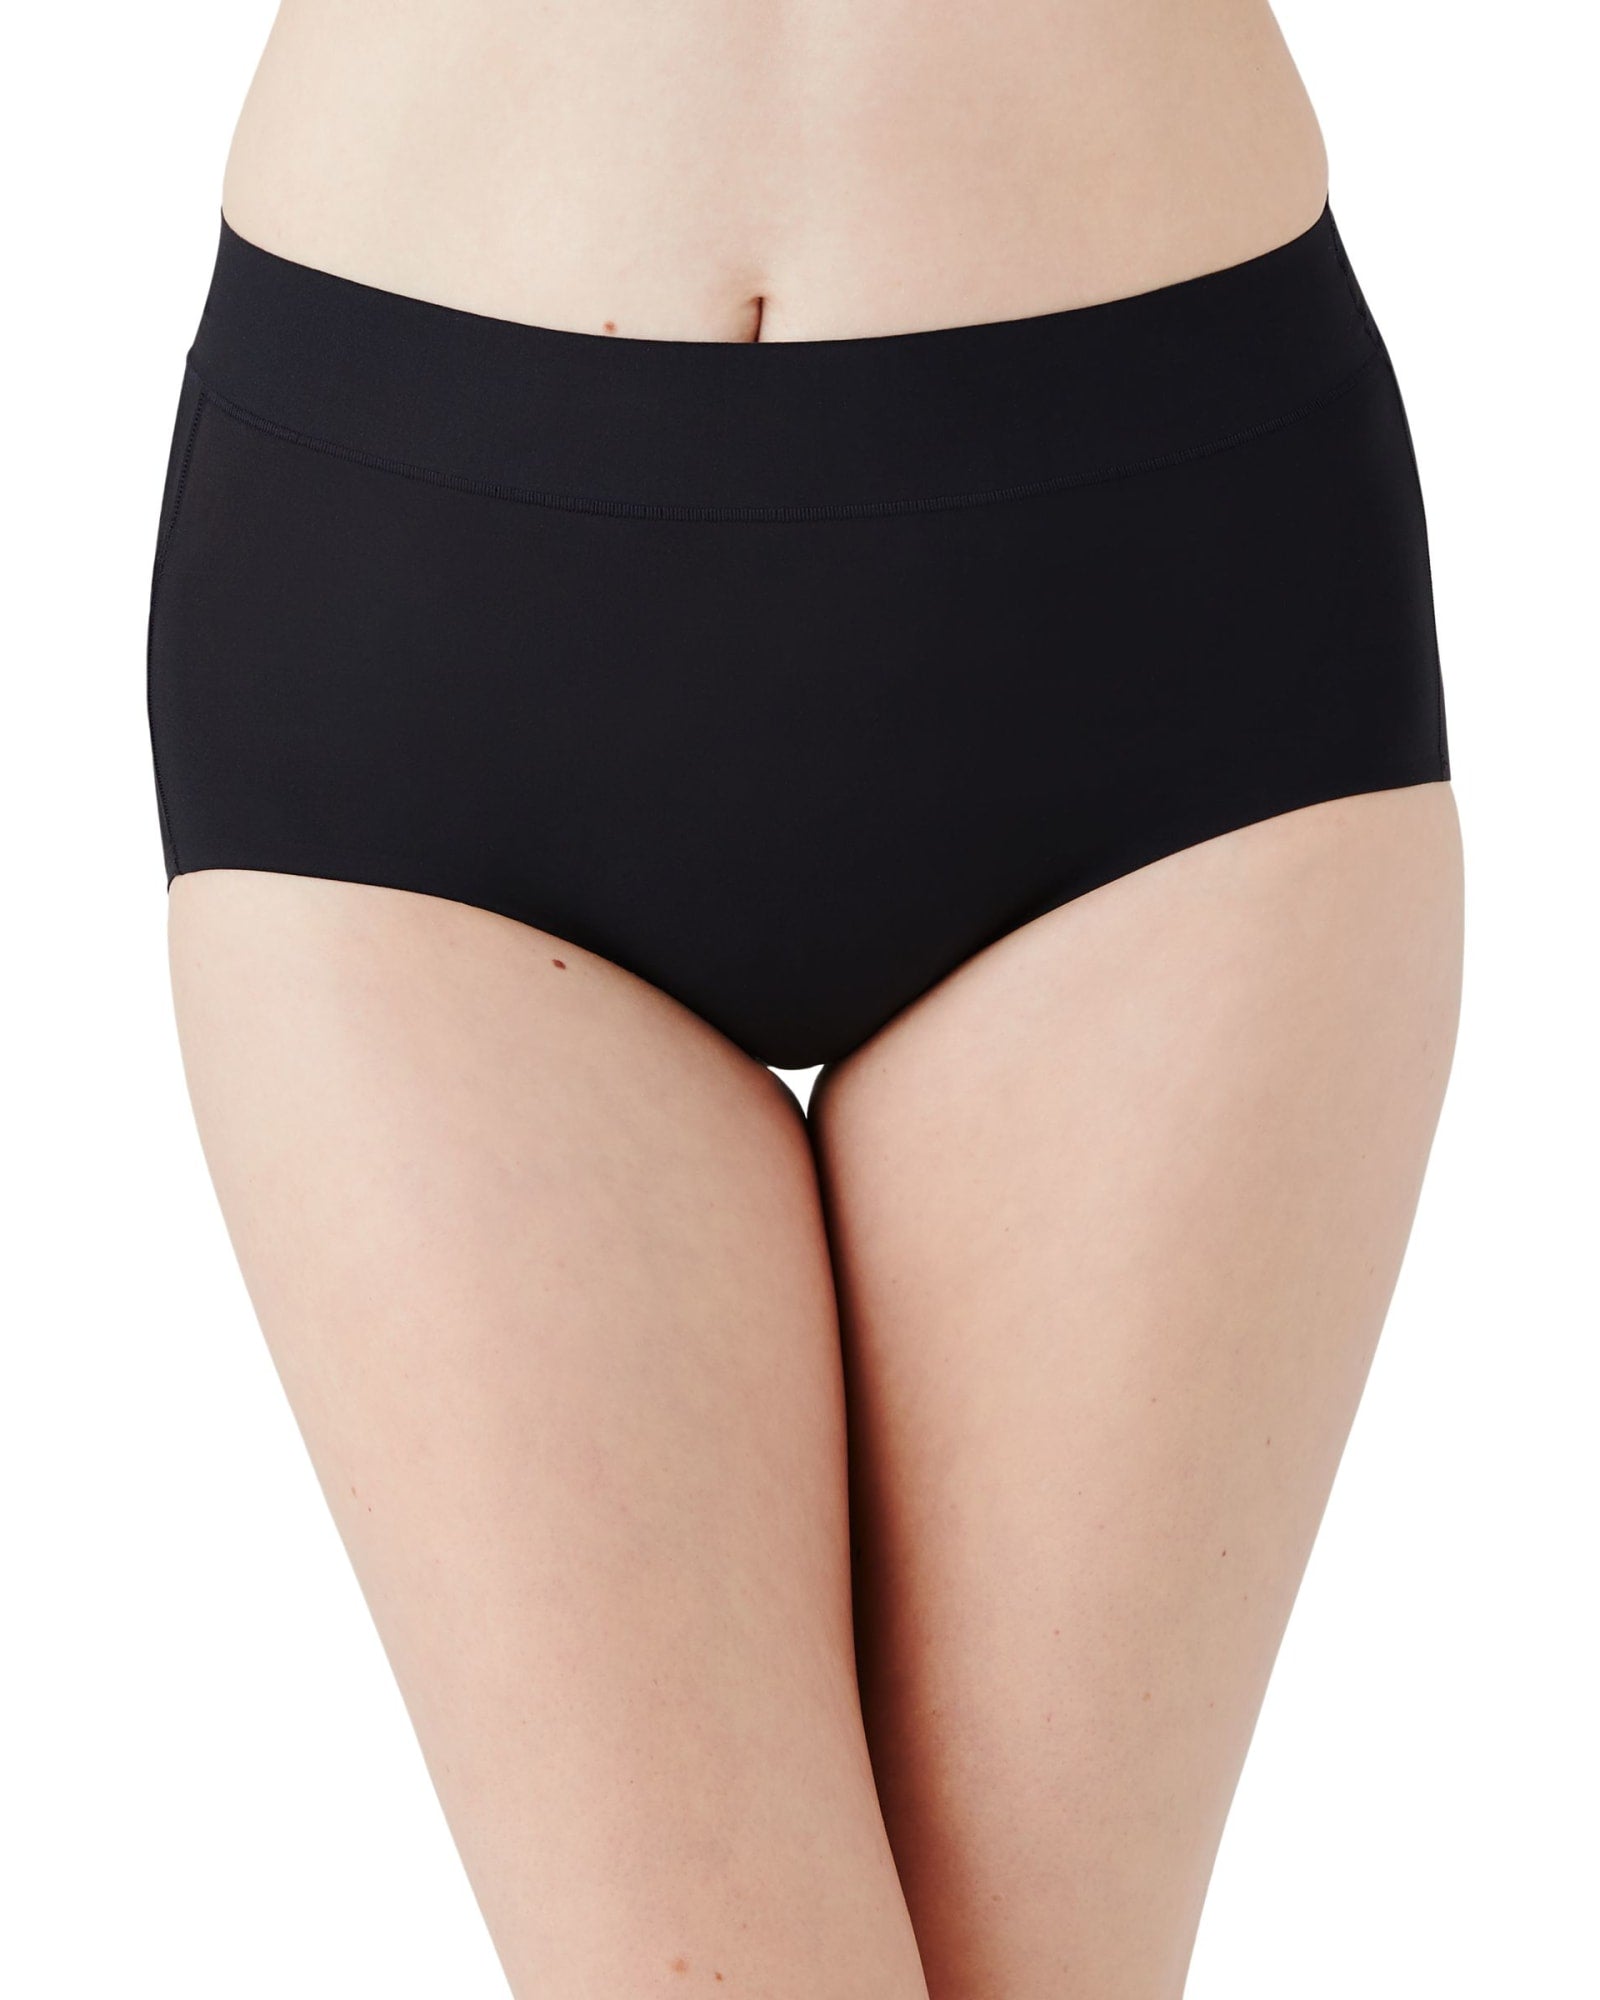 EBY + Seamless Sheer Highwaisted High Cut Underwear in Black